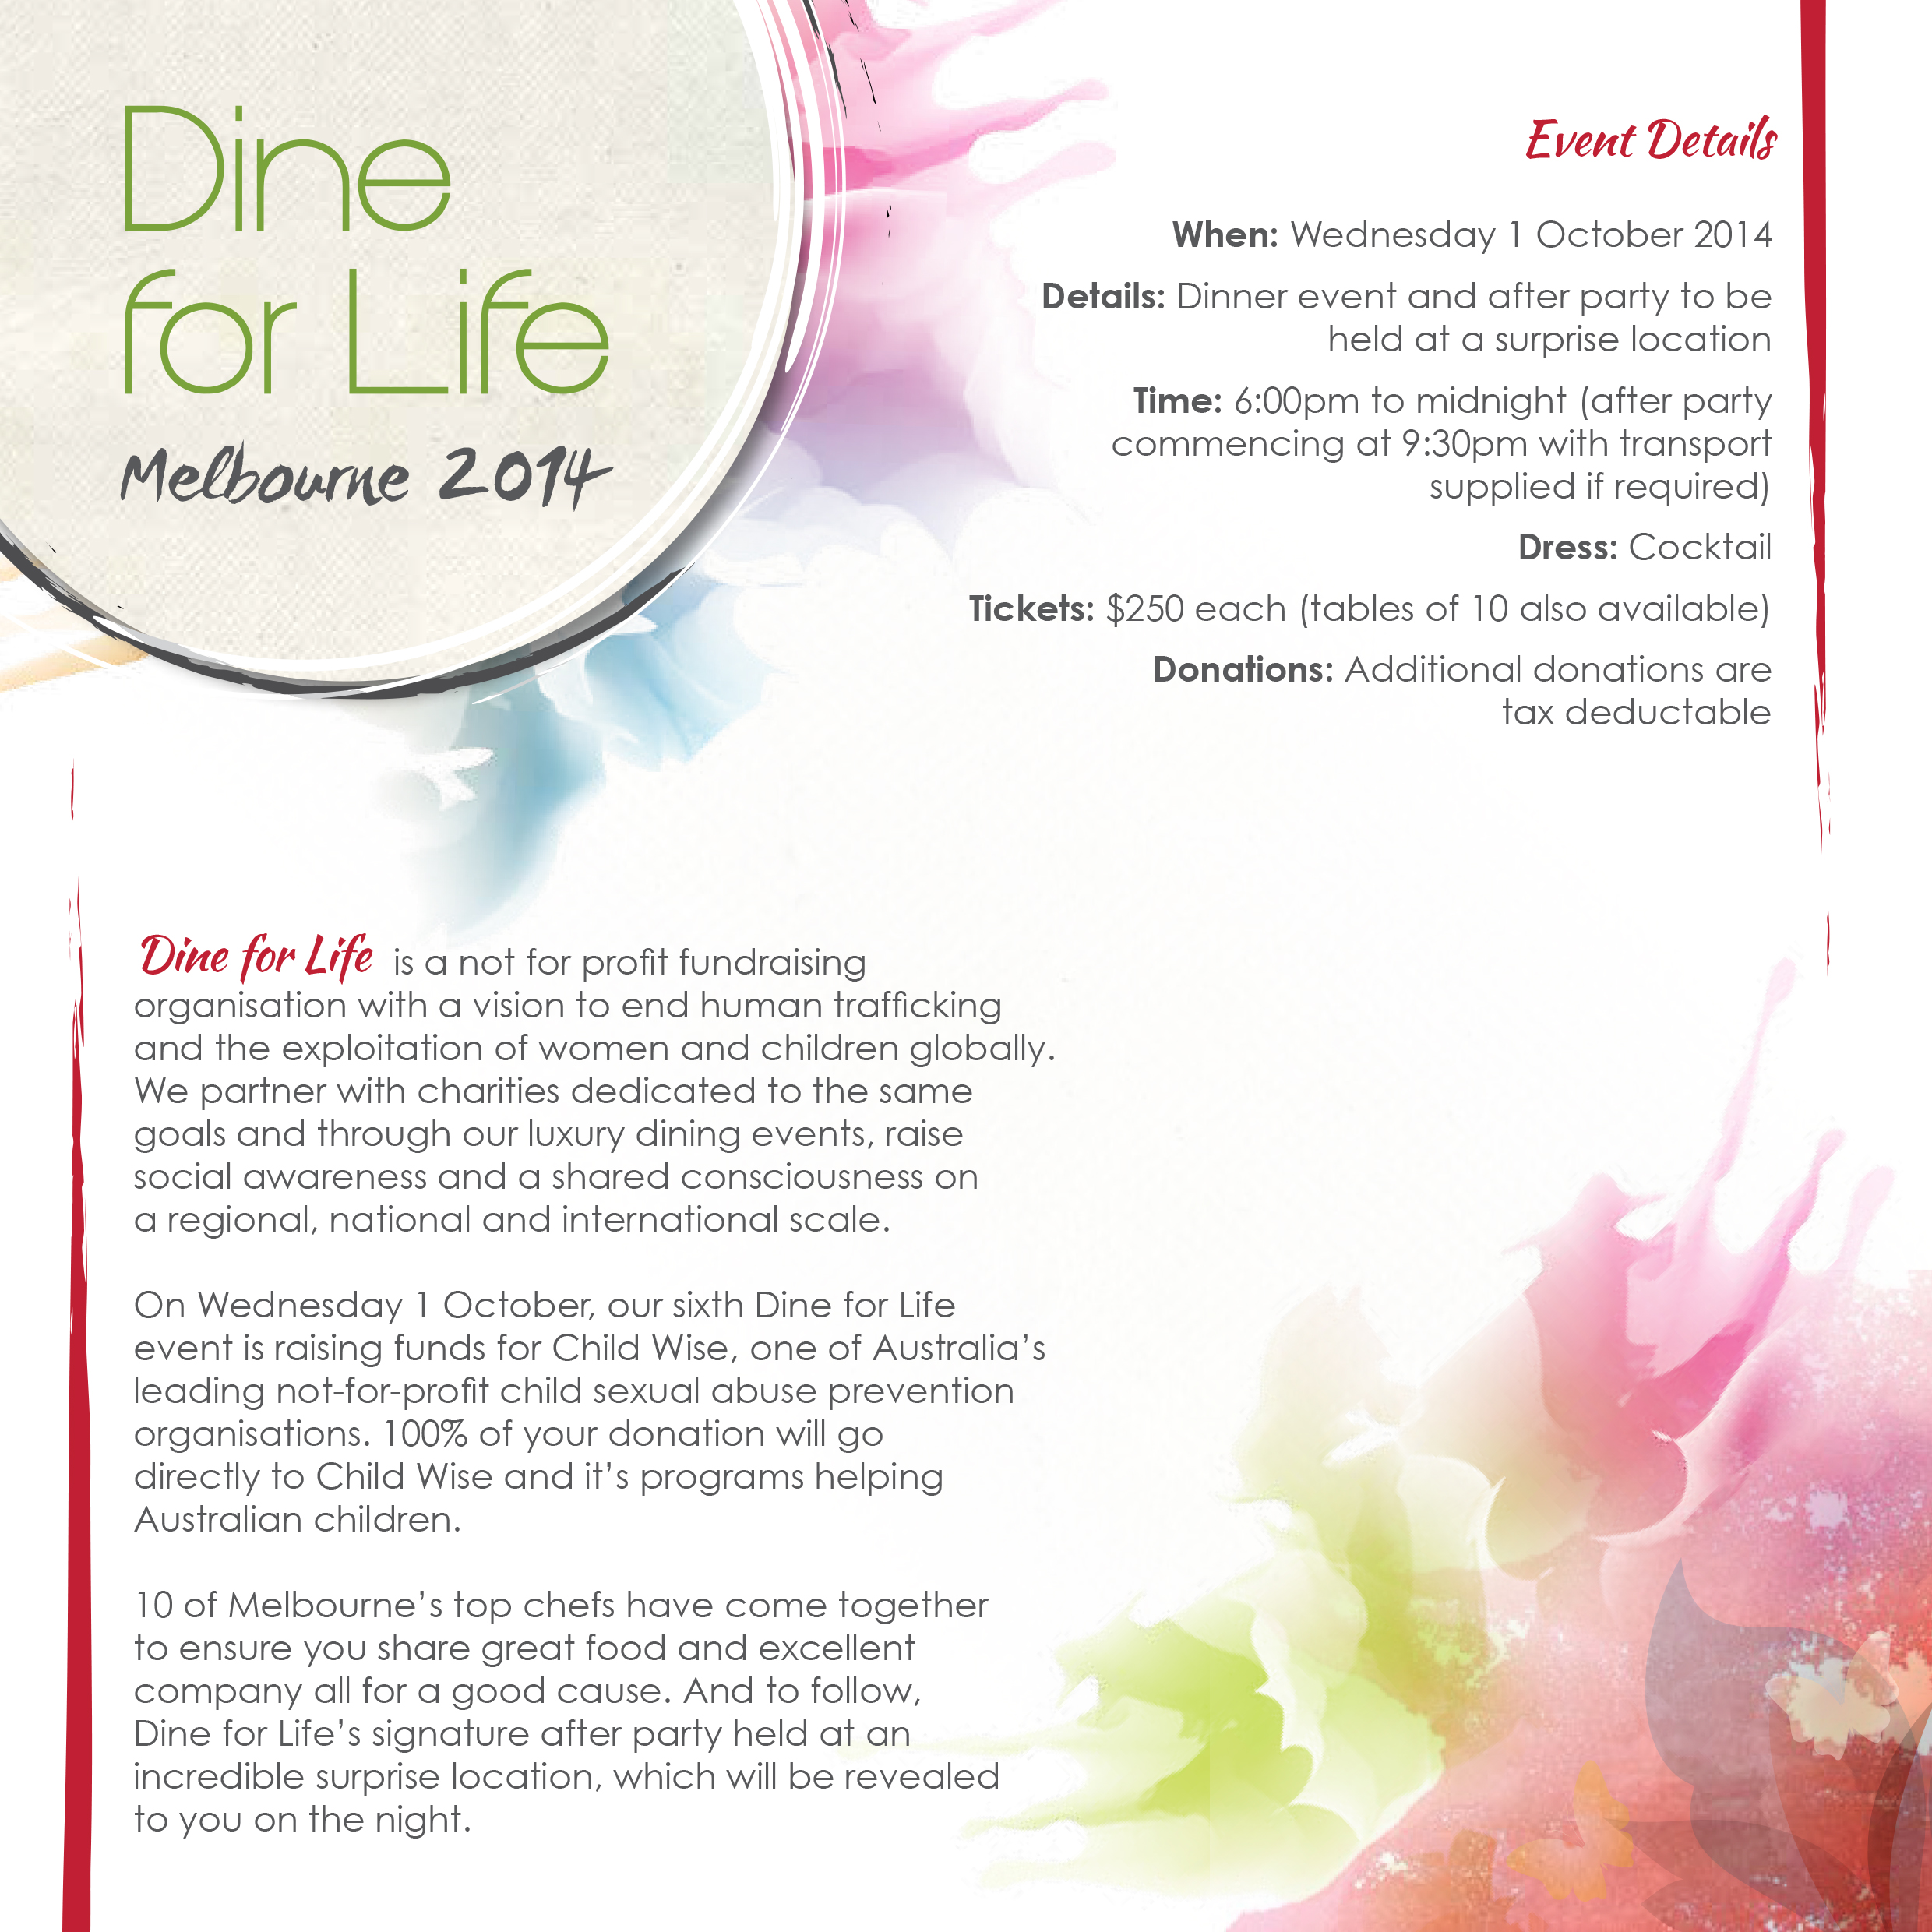 DFL 2014 Melbourne Event Invite